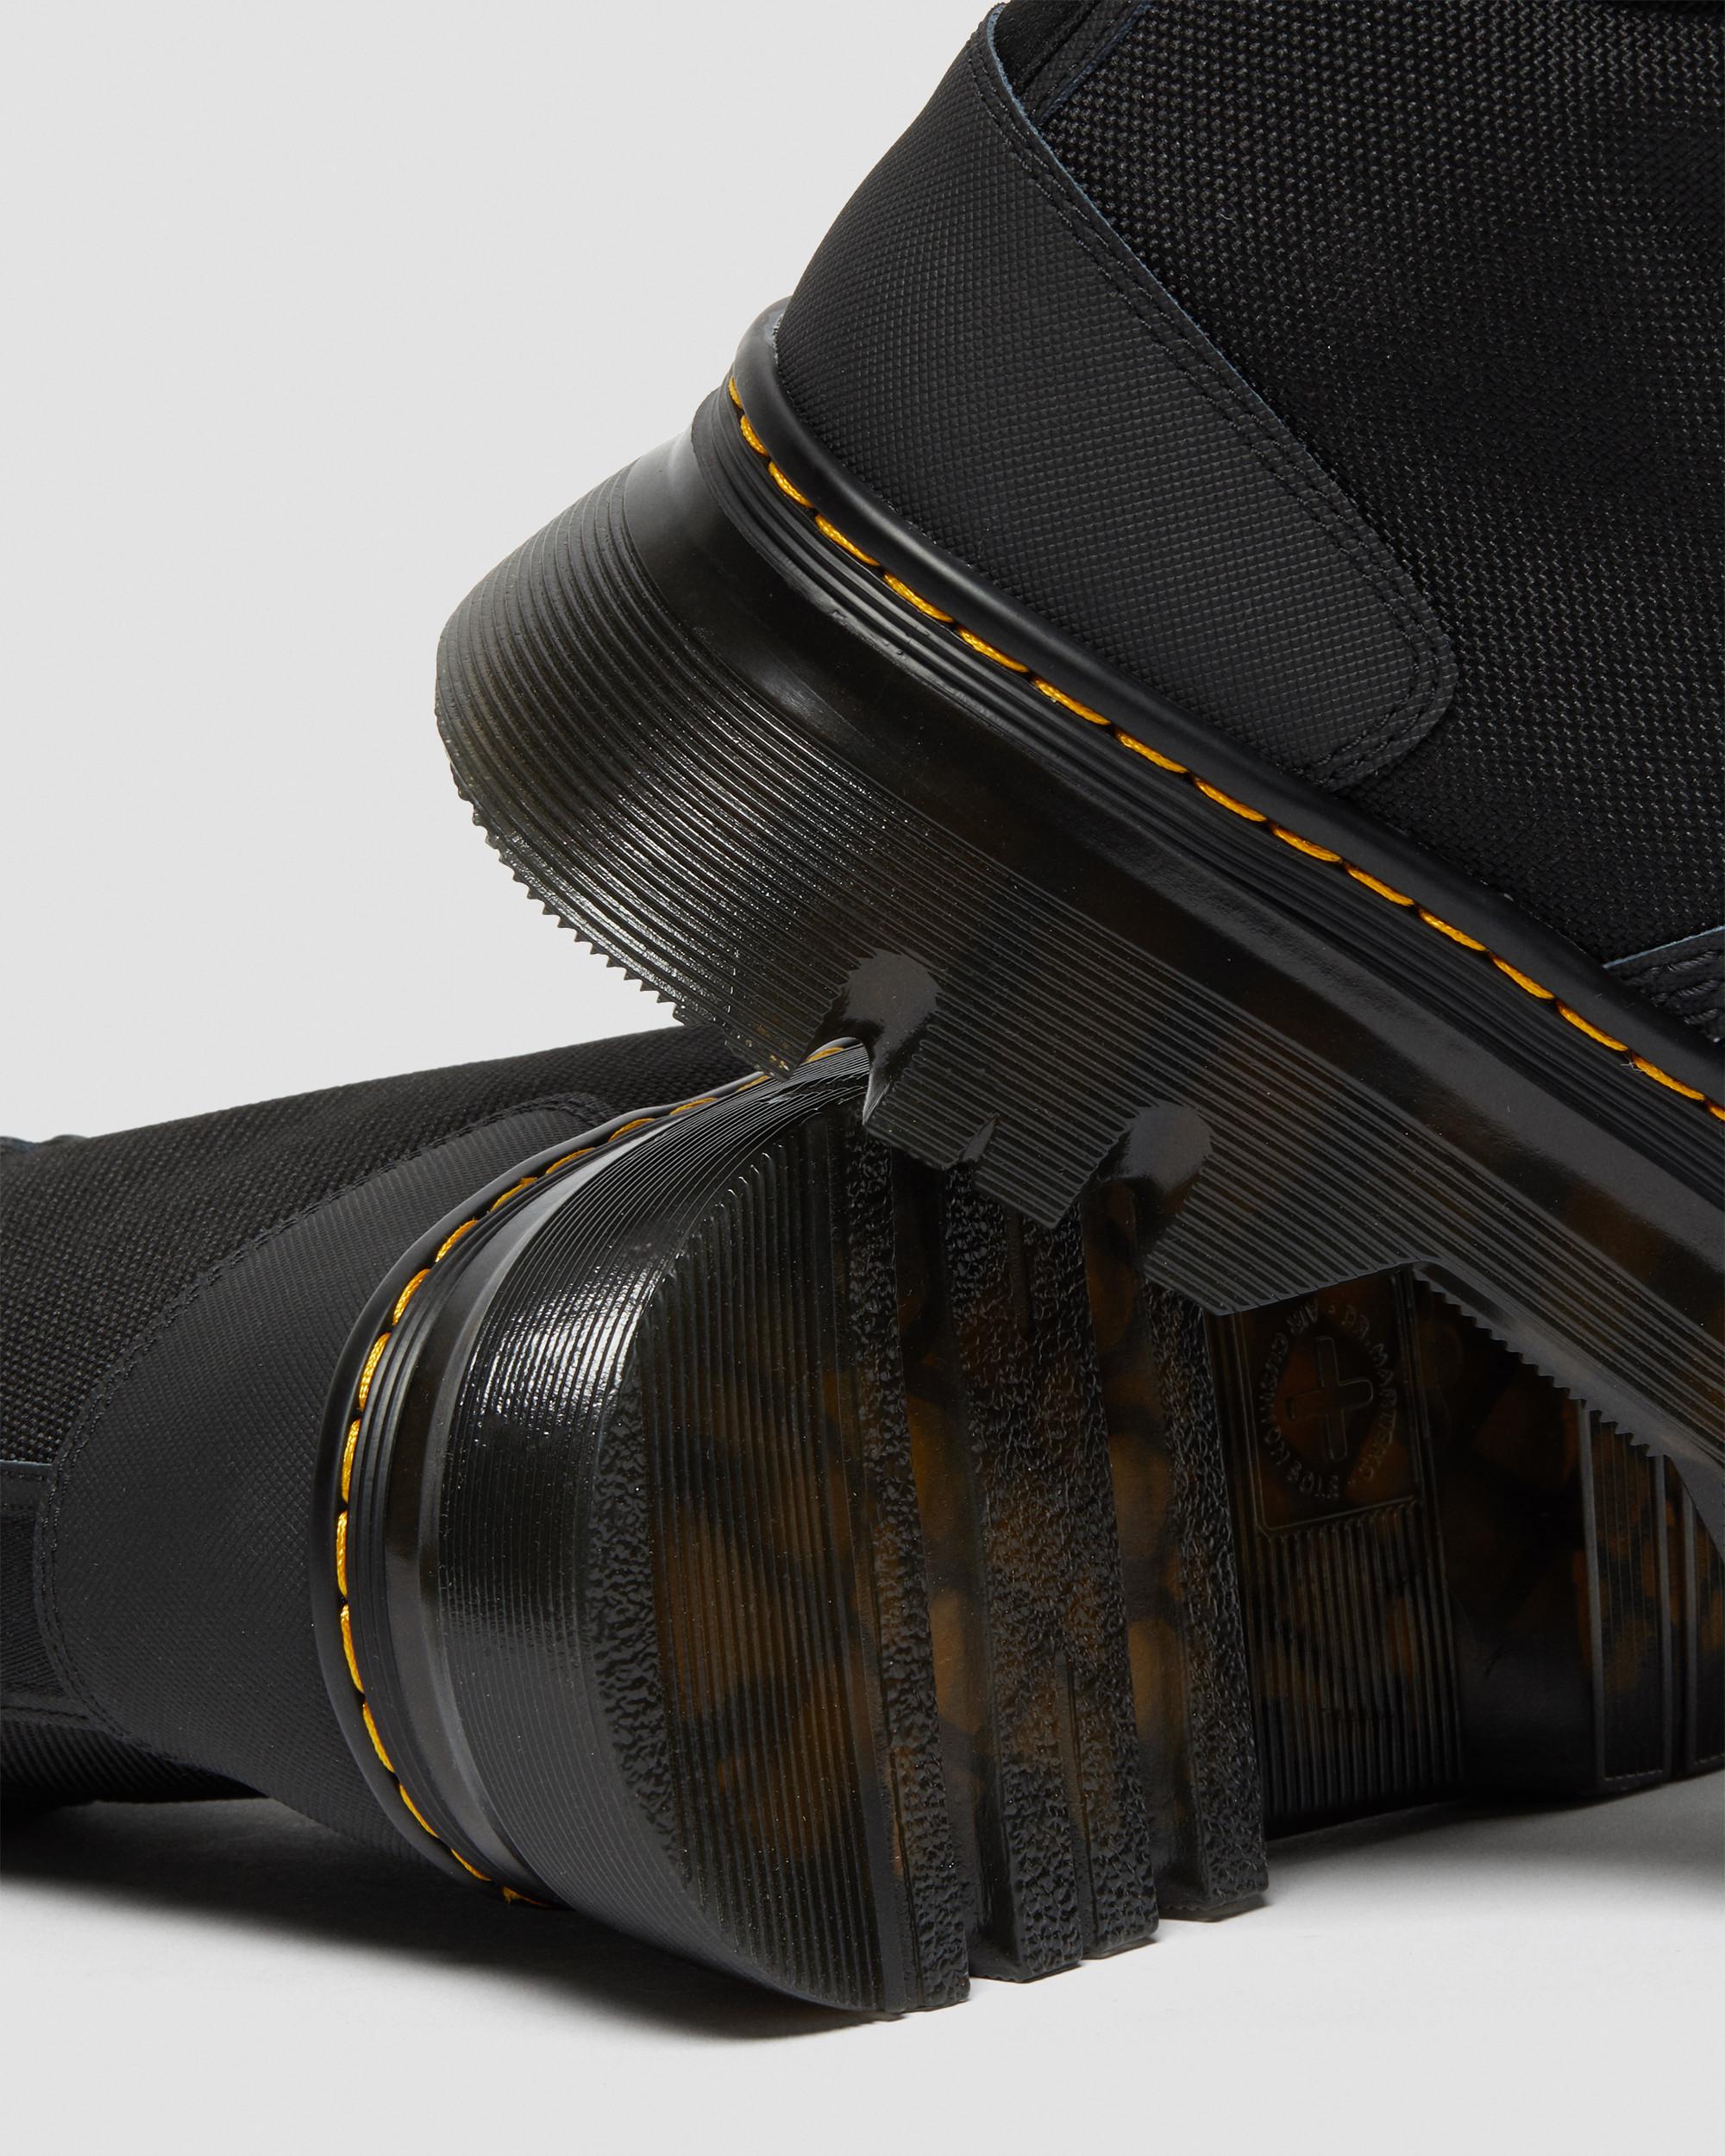 Tarik Utility Boots, Black | Dr. Martens